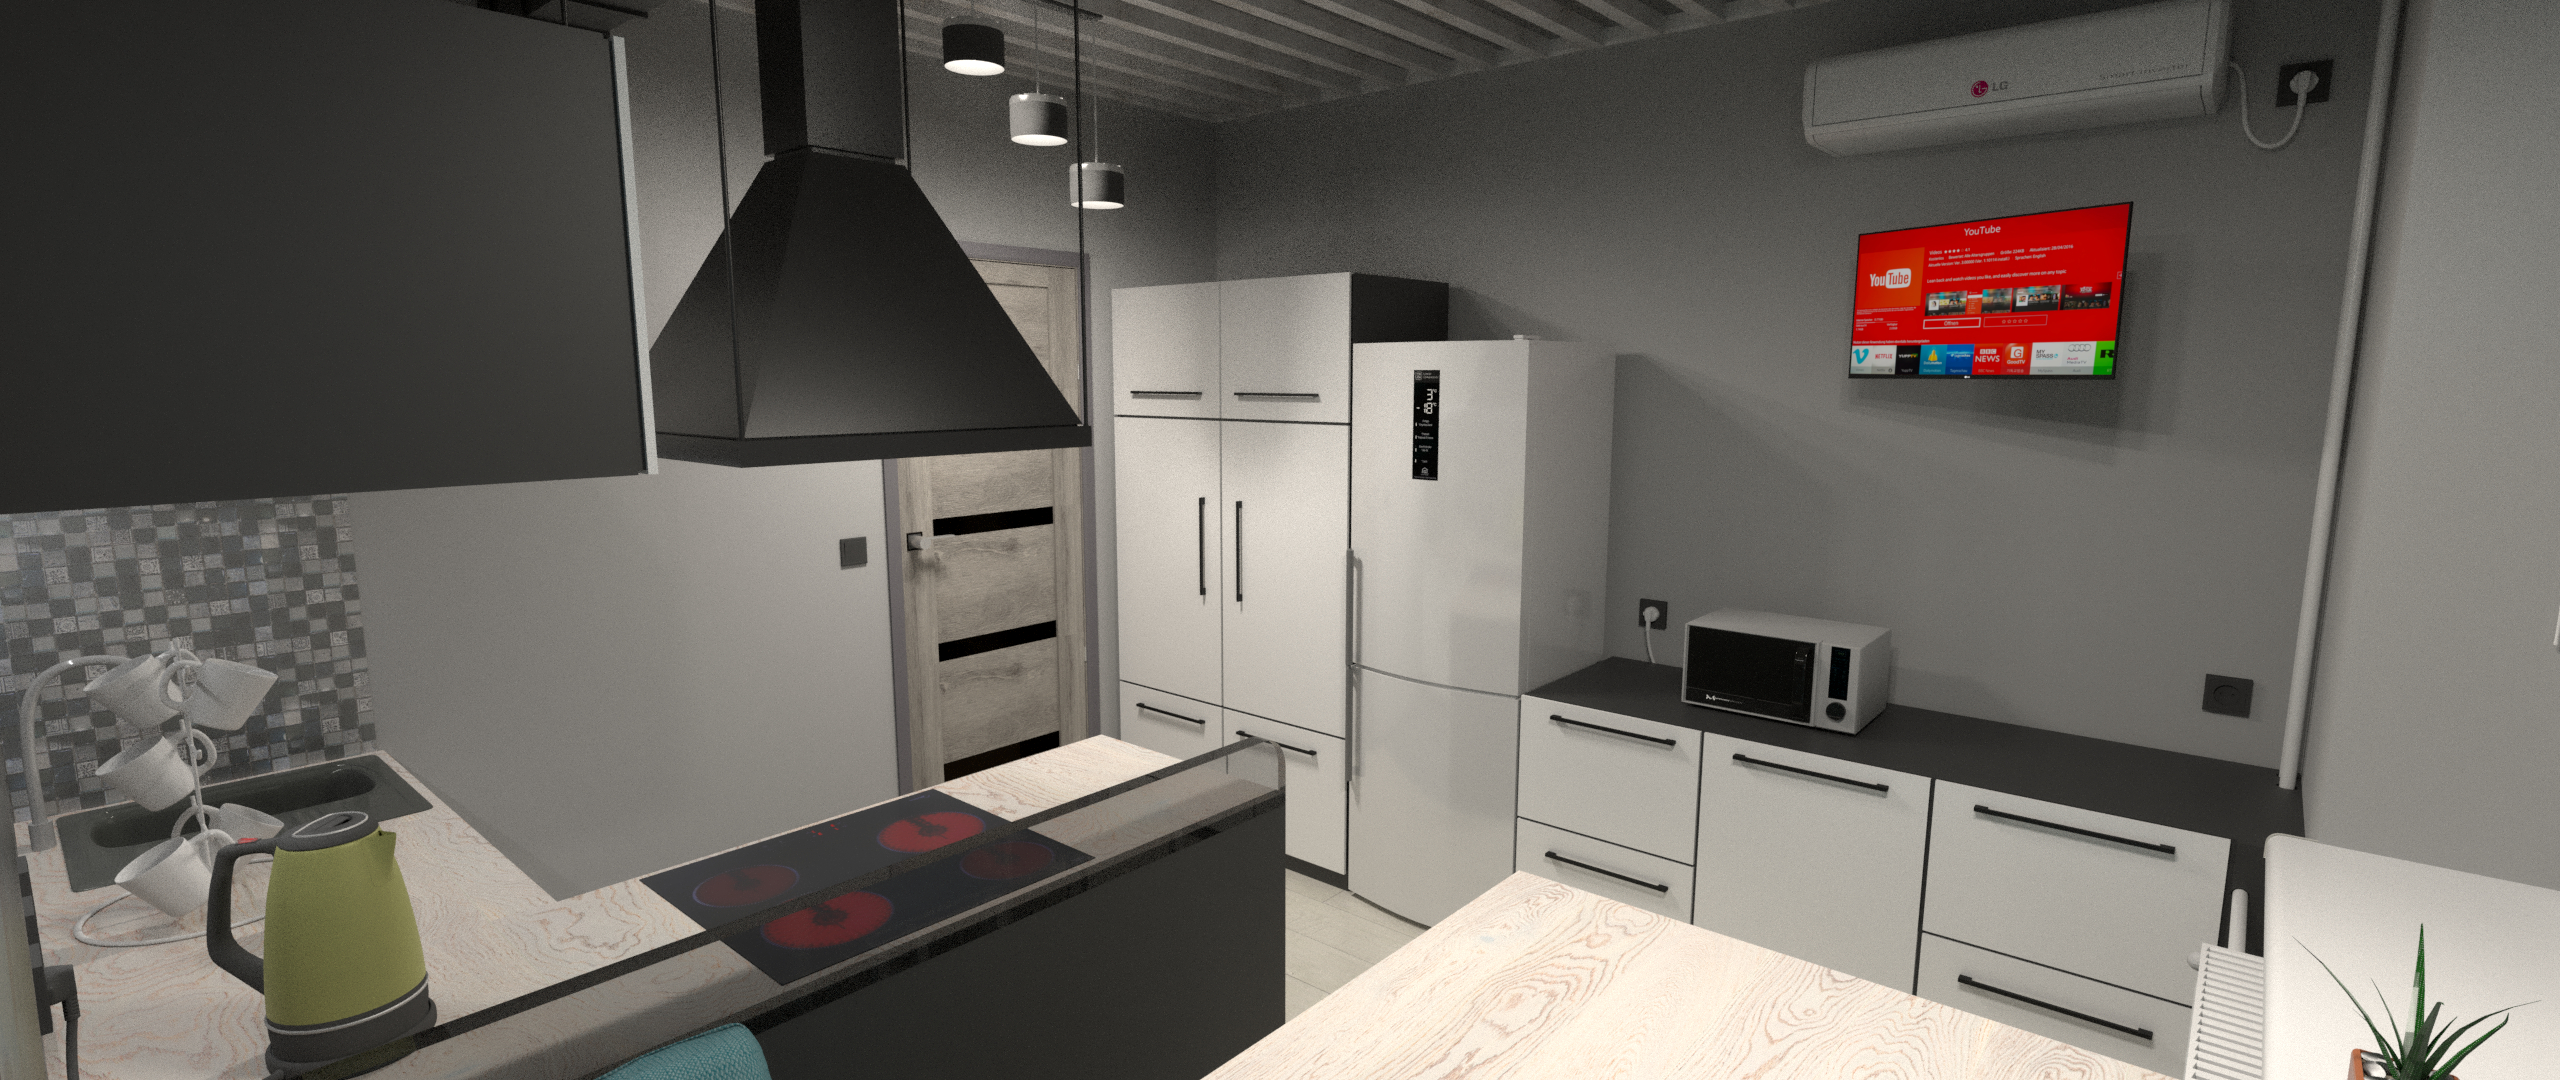 Kitchen in Blender cycles render image